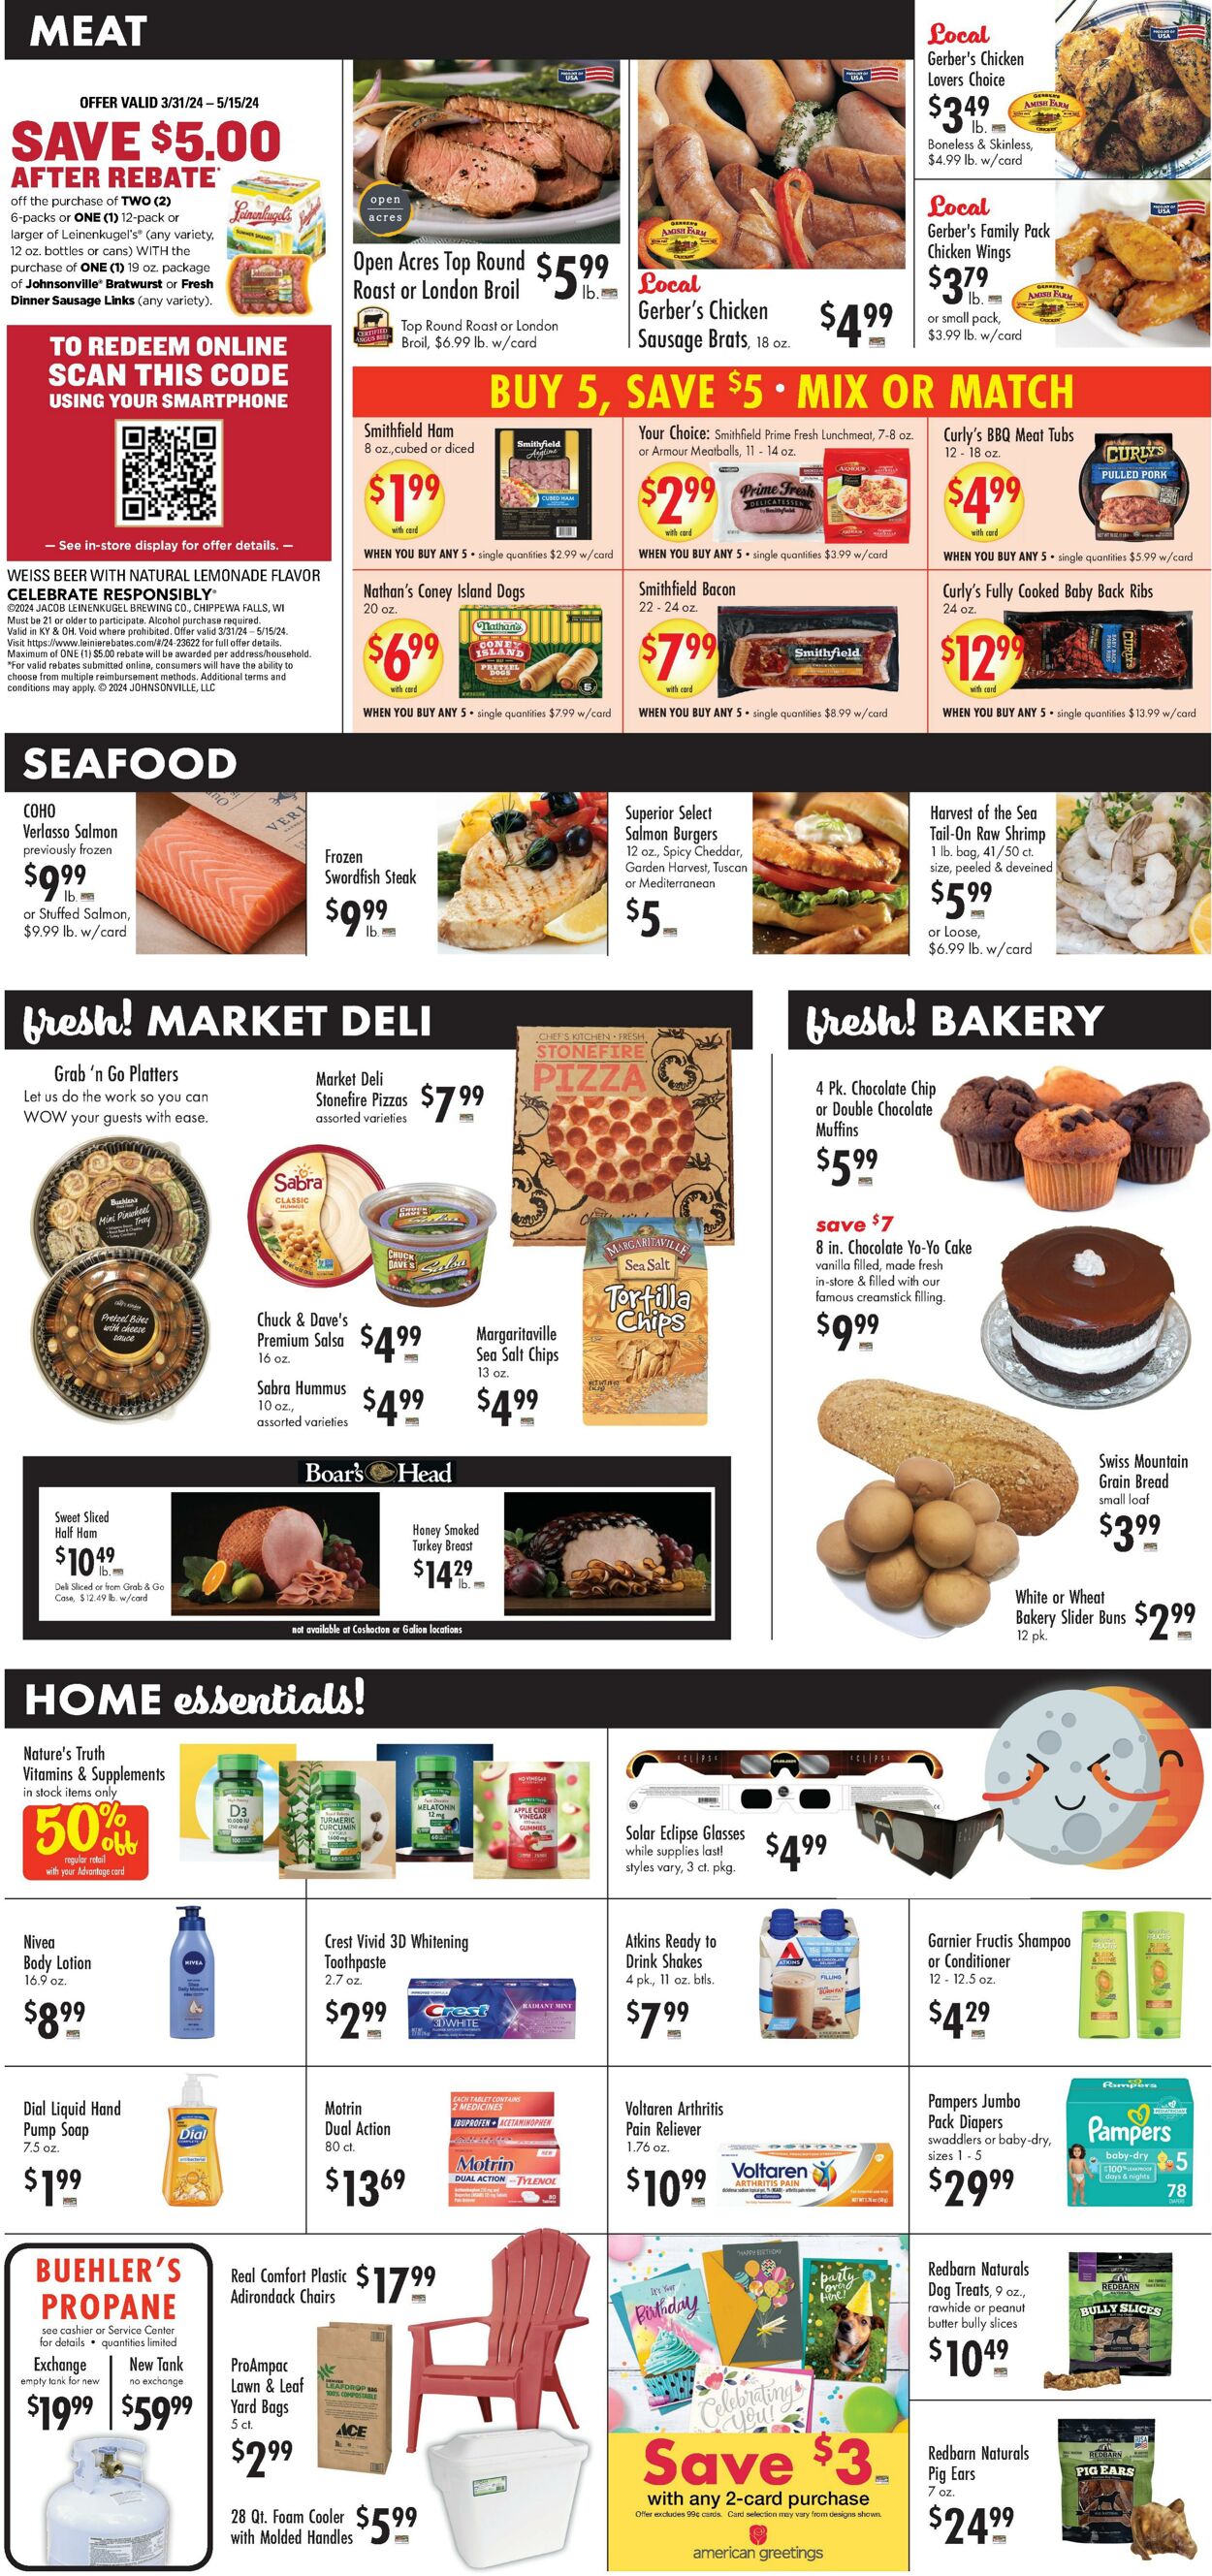 Weekly ad Buehler's Fresh Food 04/03/2024 - 04/09/2024